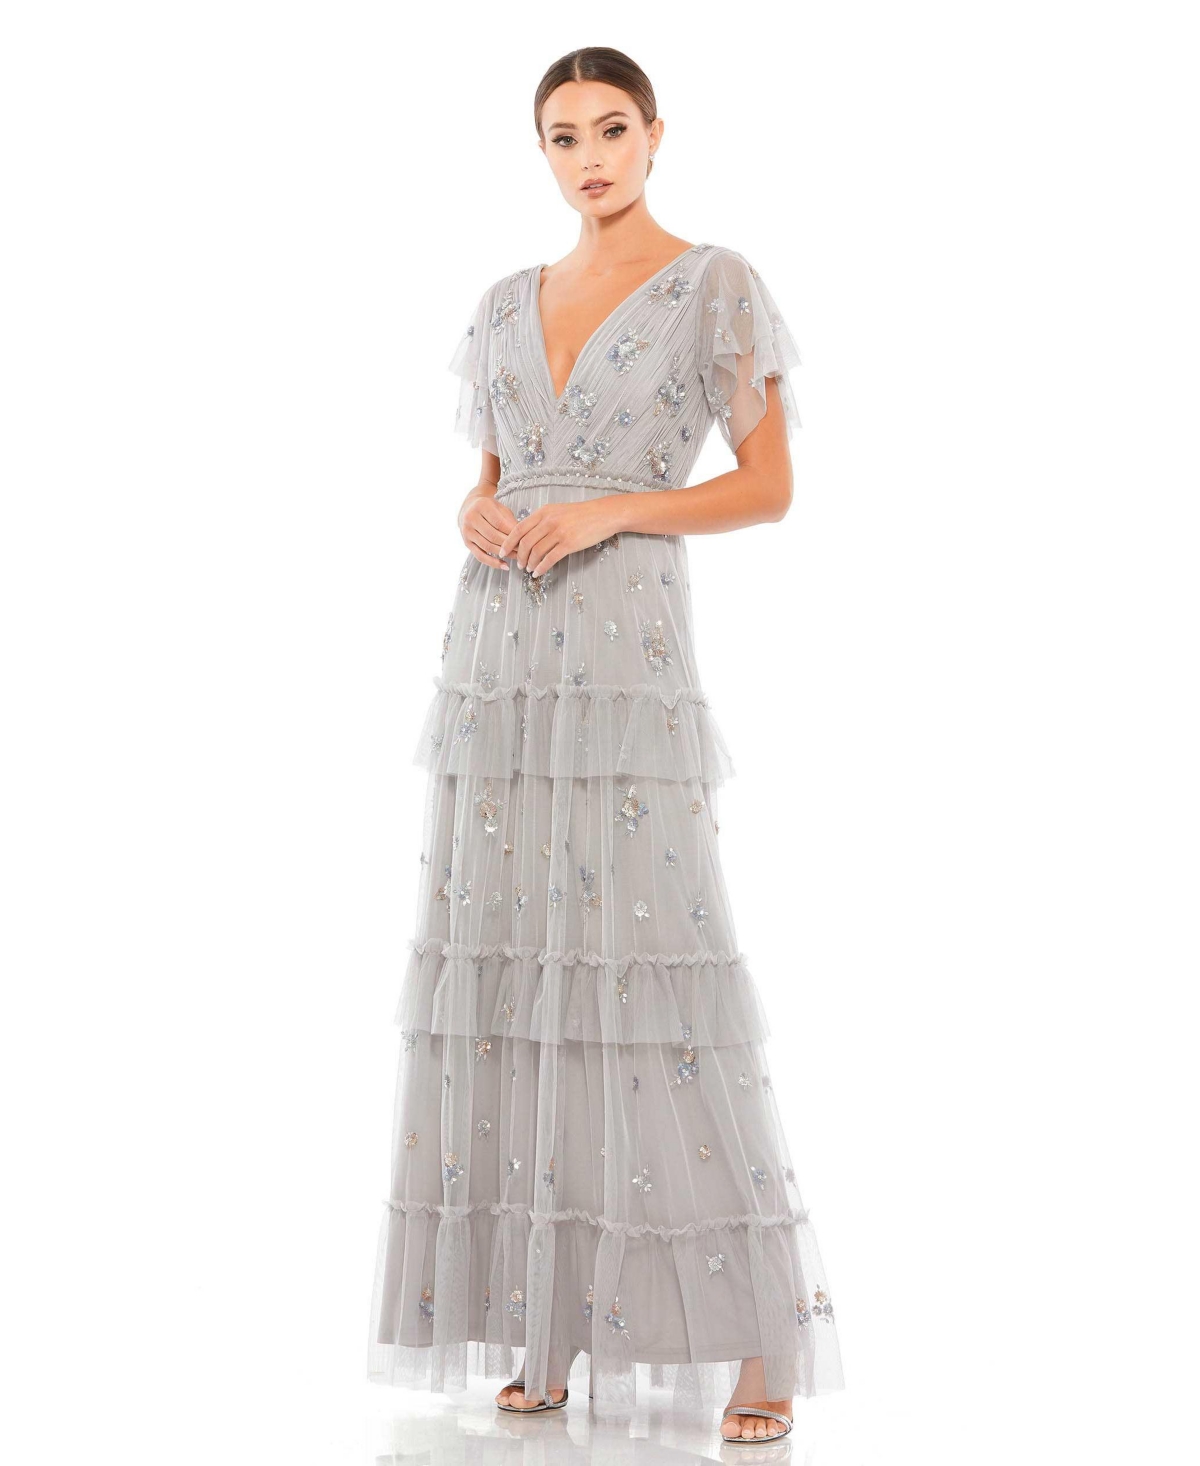 Edwardian Evening Gowns, Ballgowns, Formal Dresses Womens Ruffle Tiered Embellished Flutter Sleeve Gown - Platinum $598.00 AT vintagedancer.com